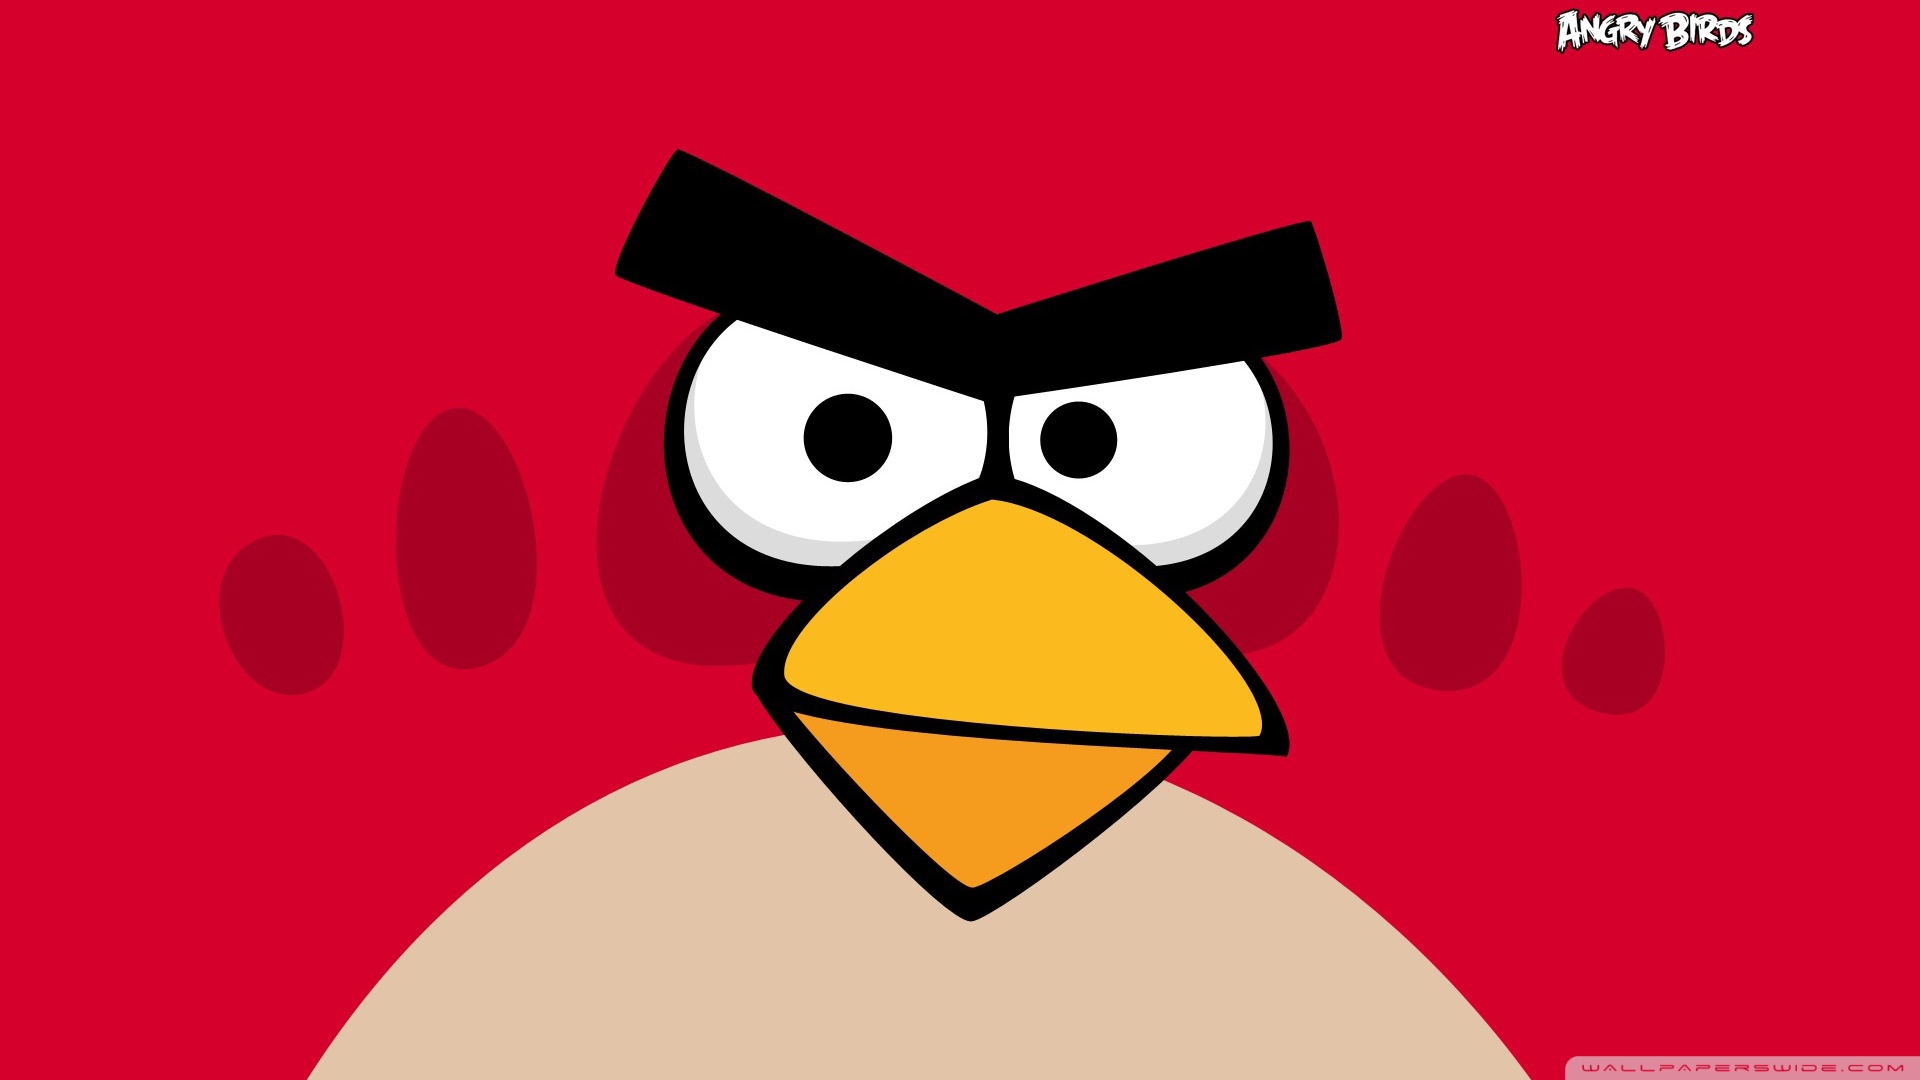 Angry Birds Red Bird Ultra HD Desktop Background Wallpaper For